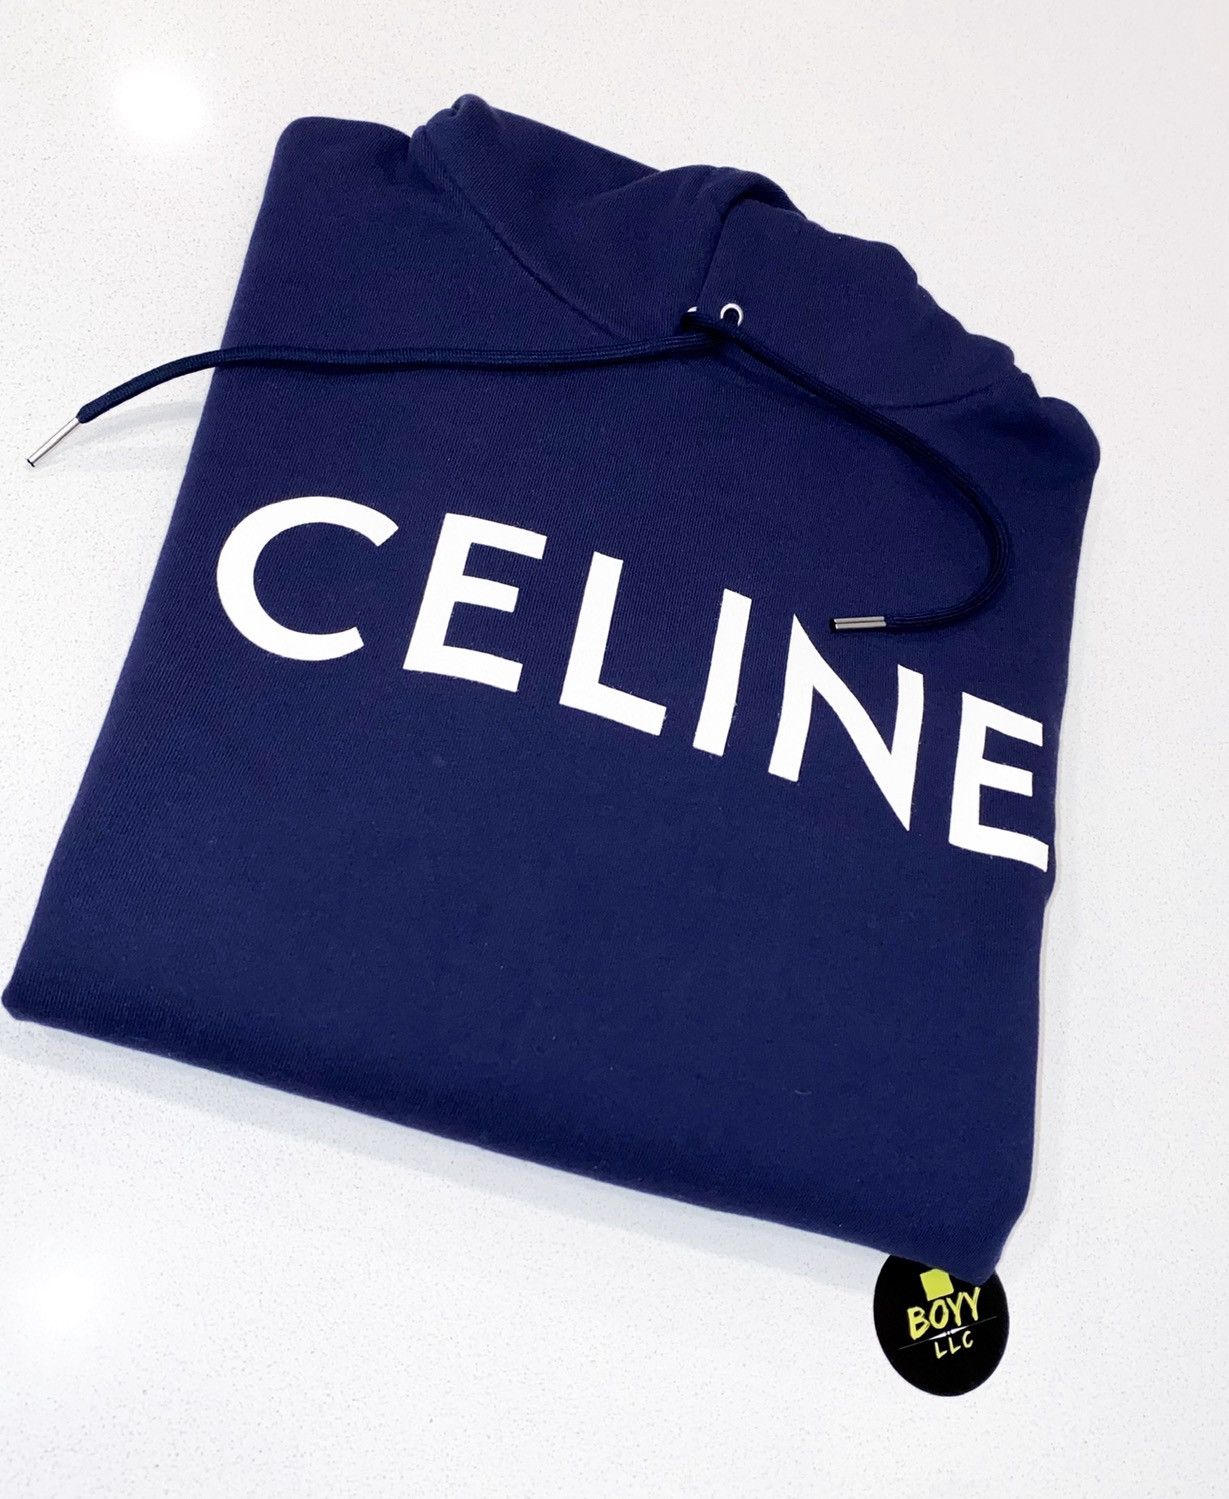 Celine Celine logo hoodie | Grailed